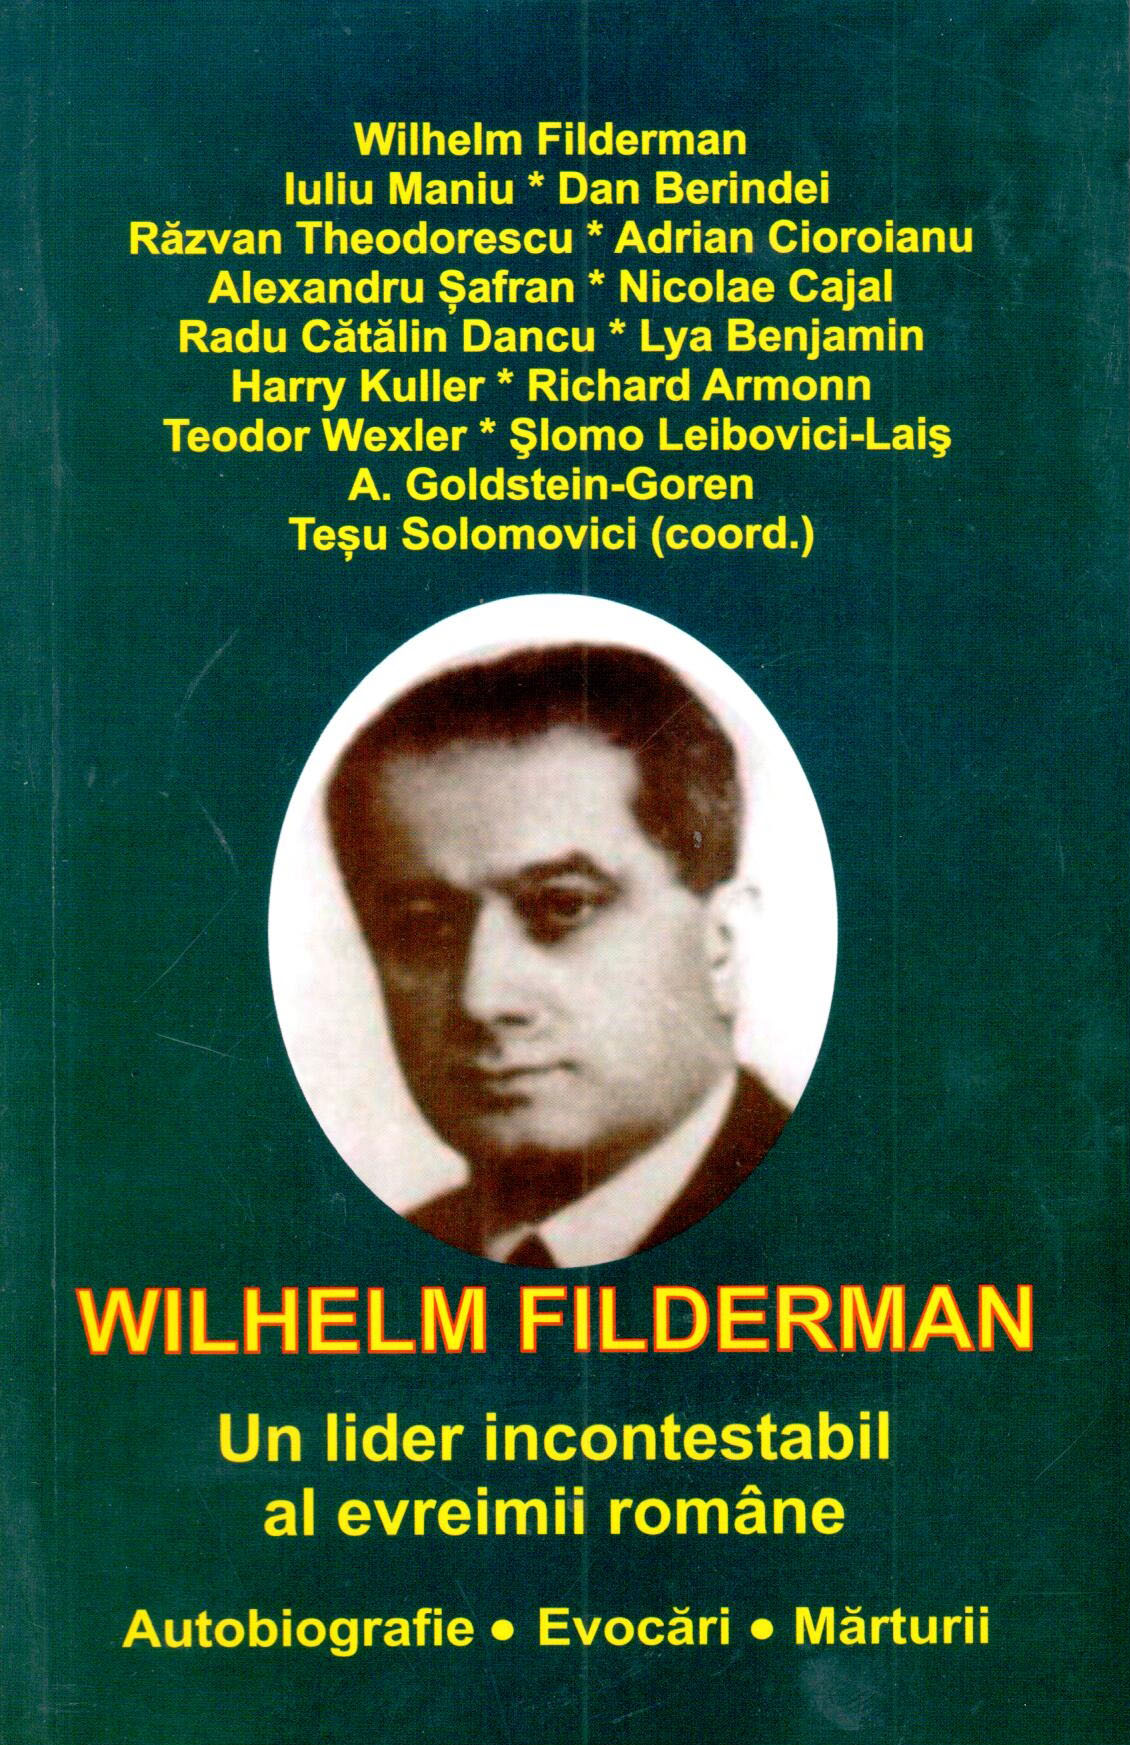 Wilhelm Filderman | Tesu Solomovici Biografii 2022